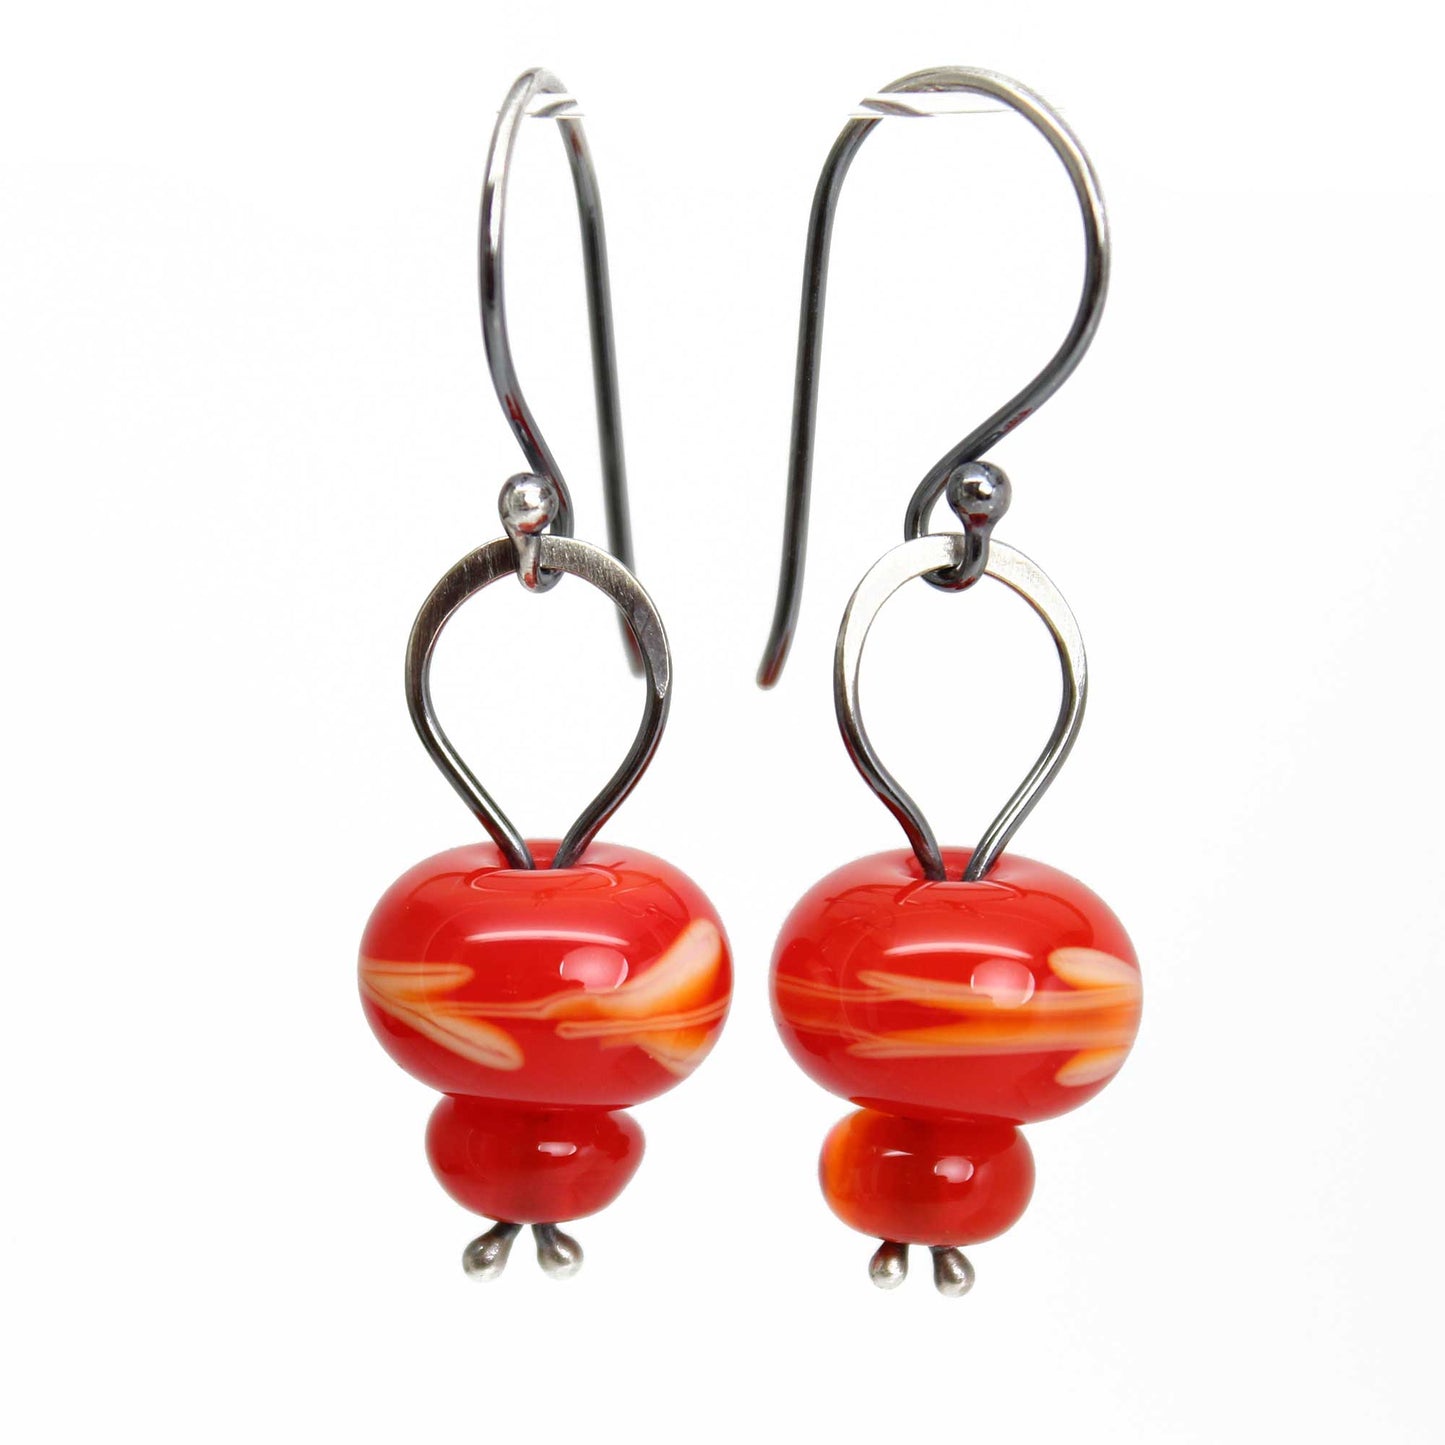 Red Lampwork Bead Earrings in Sterling Silver